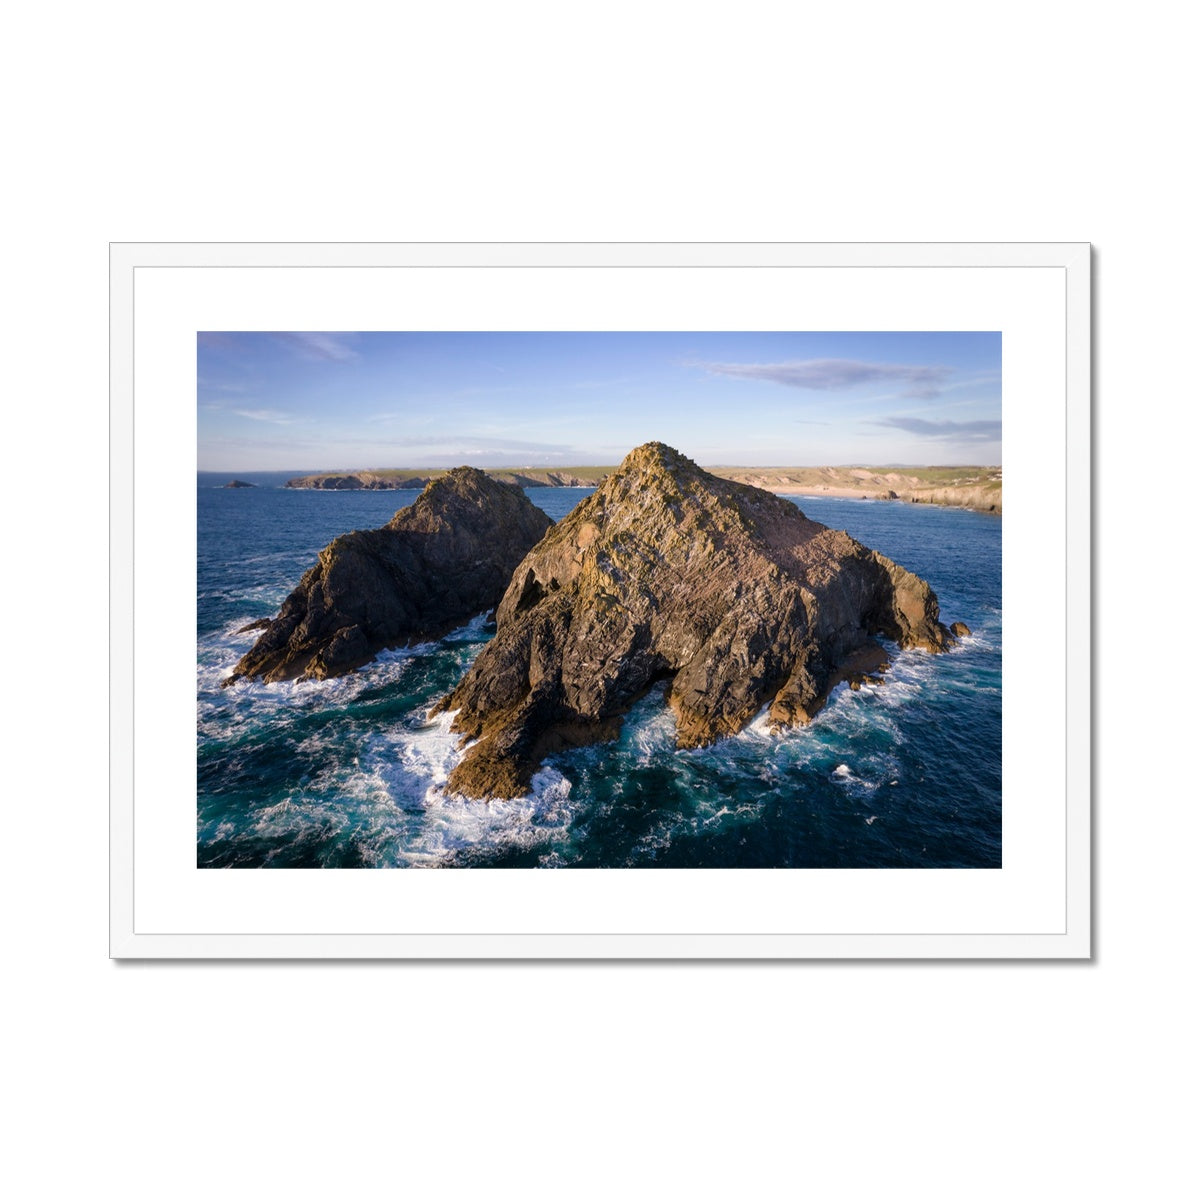 Carter's Rocks, Holywell Bay ~ Framed & Mounted Print